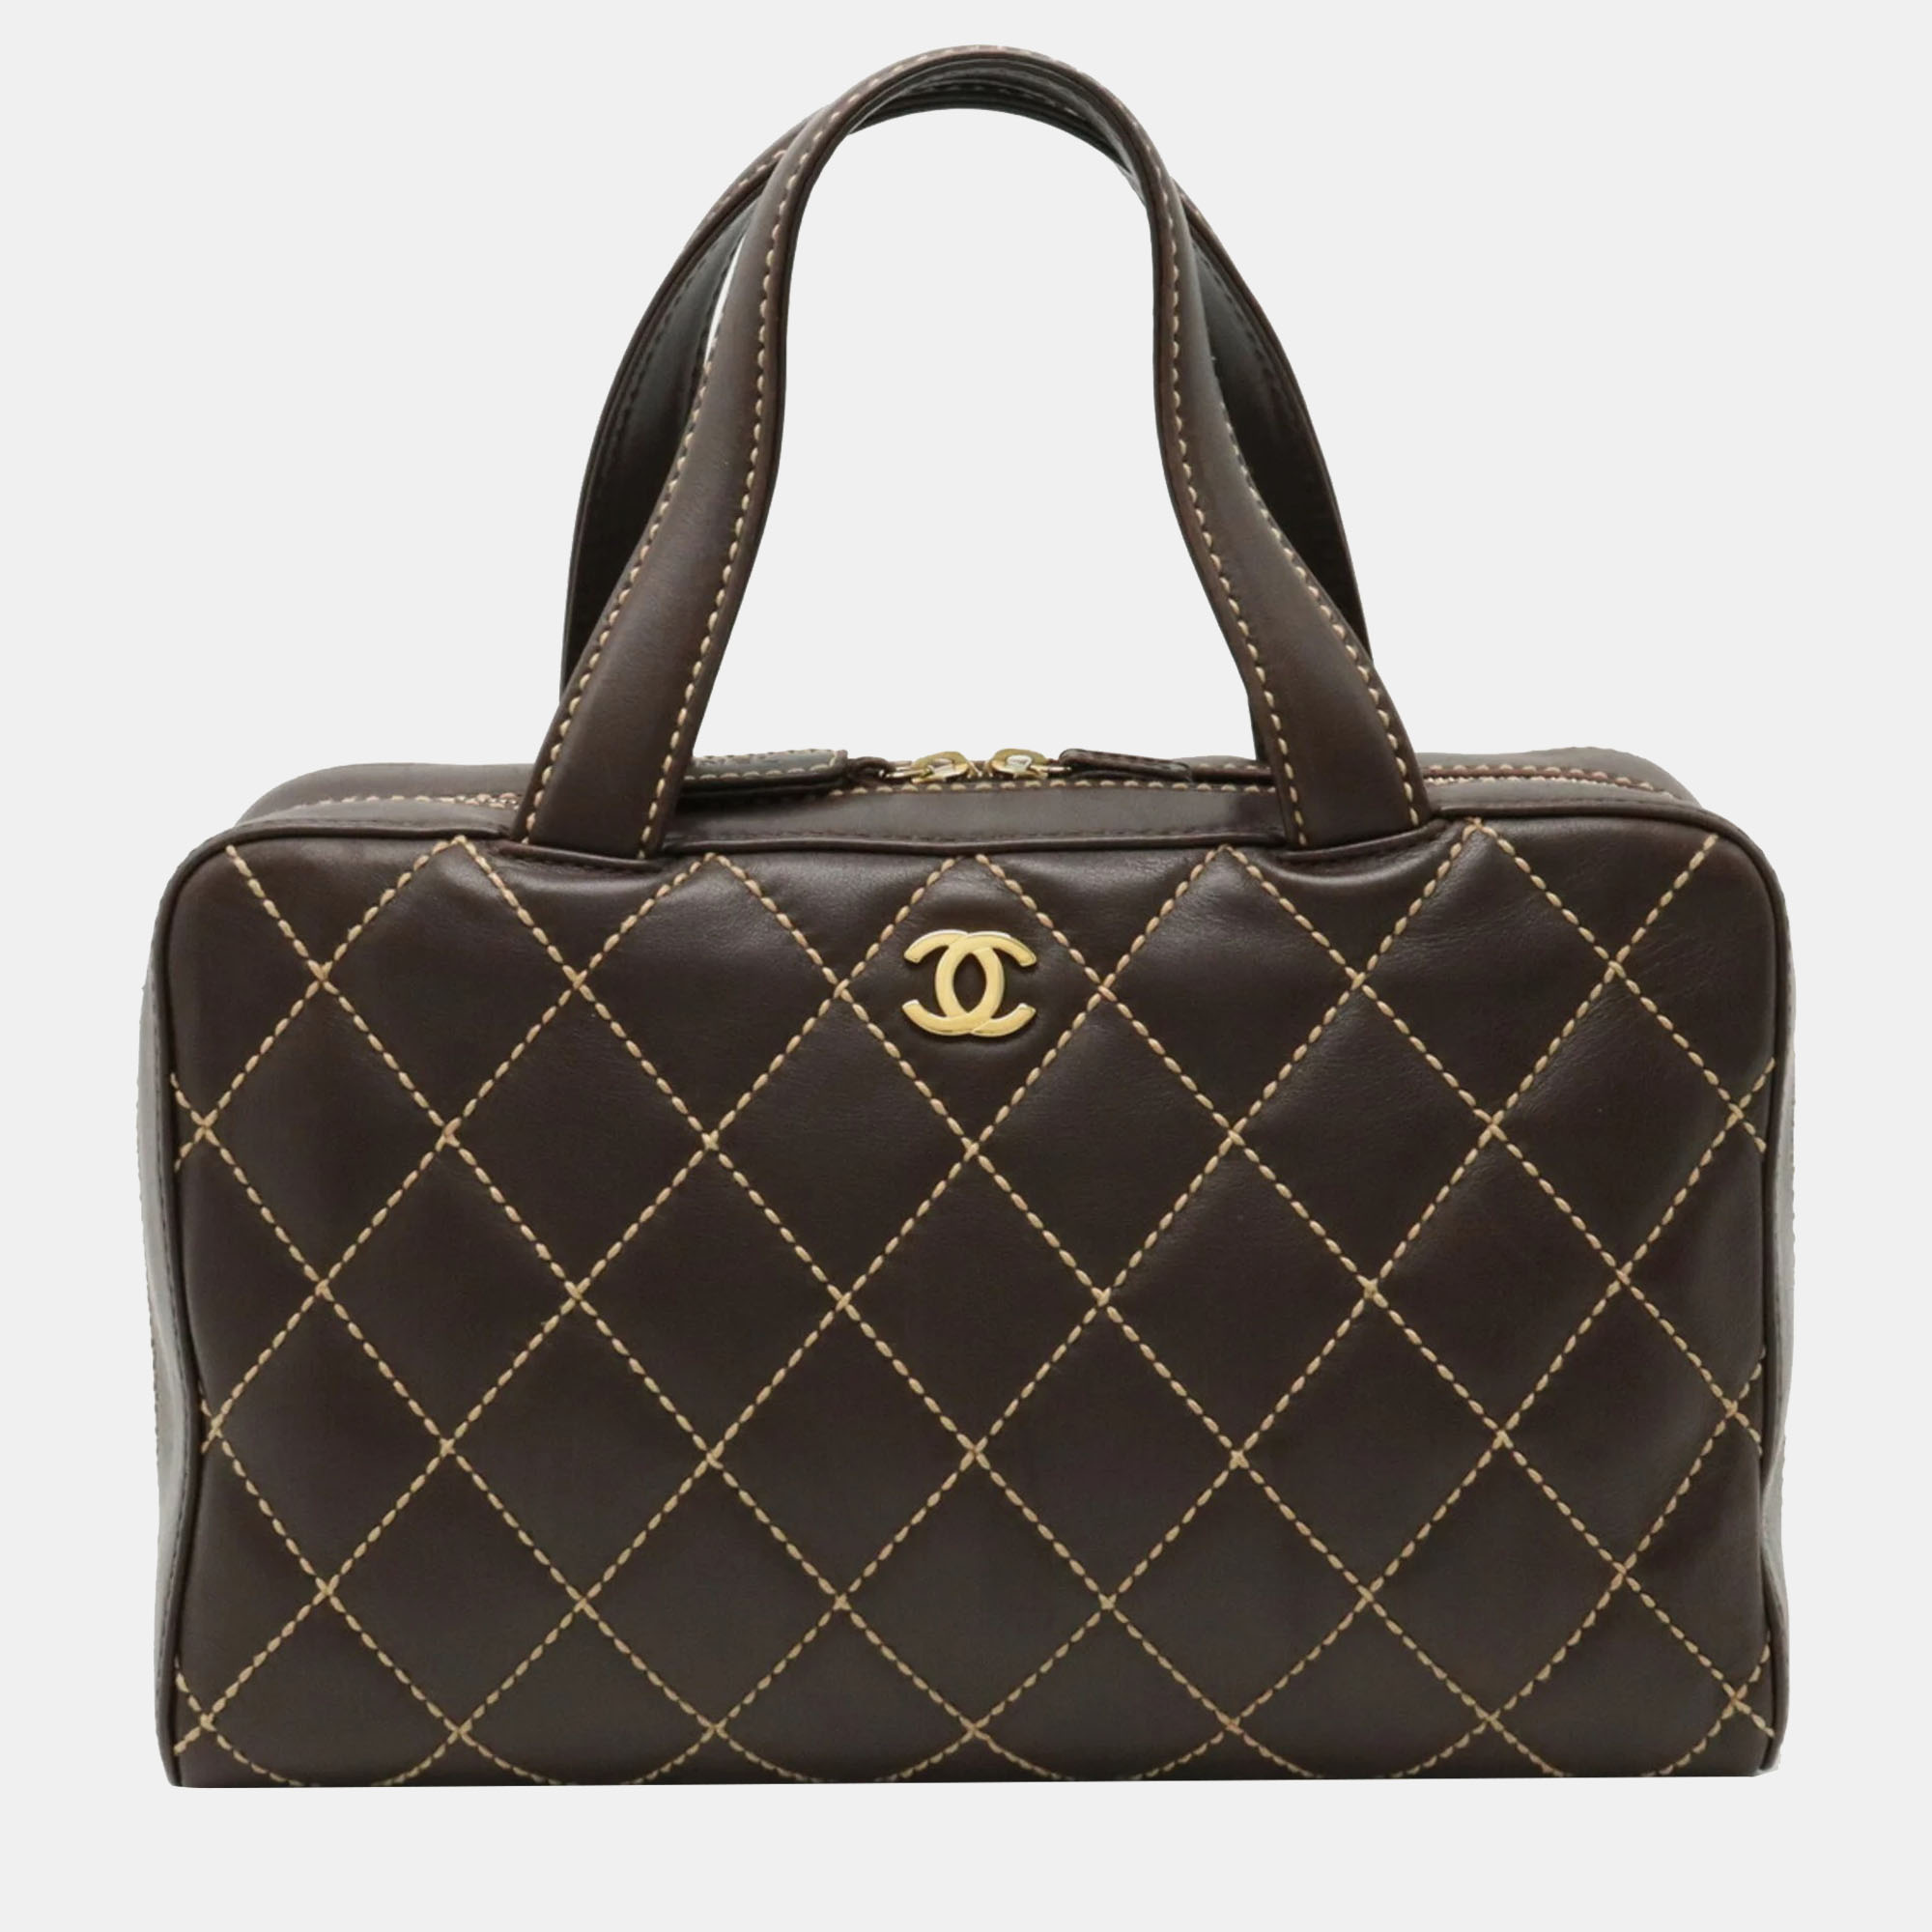 Chanel leather dark brown chanel surpique bowler bag